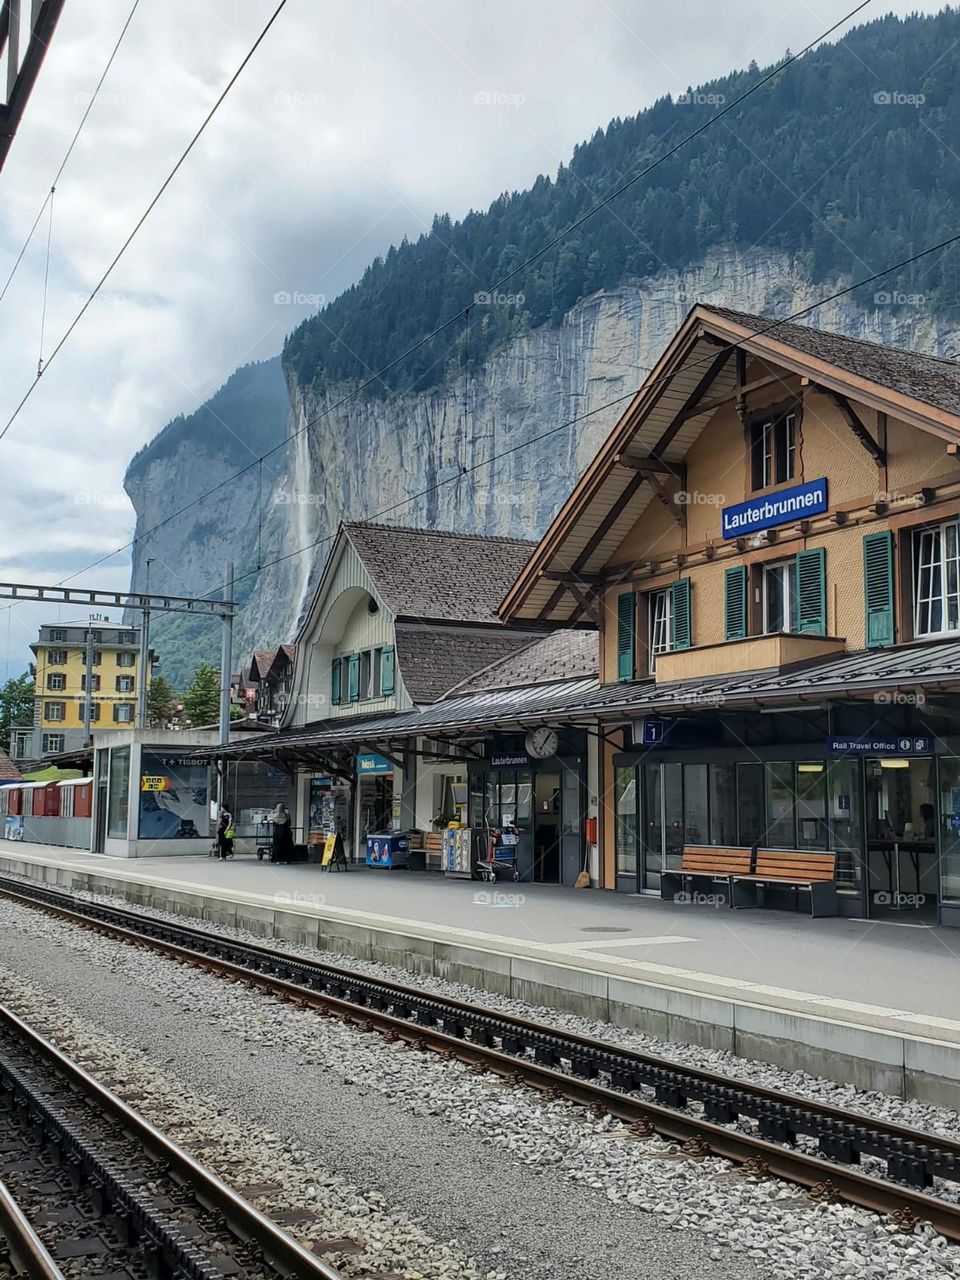 rail_station in rhe Mountain